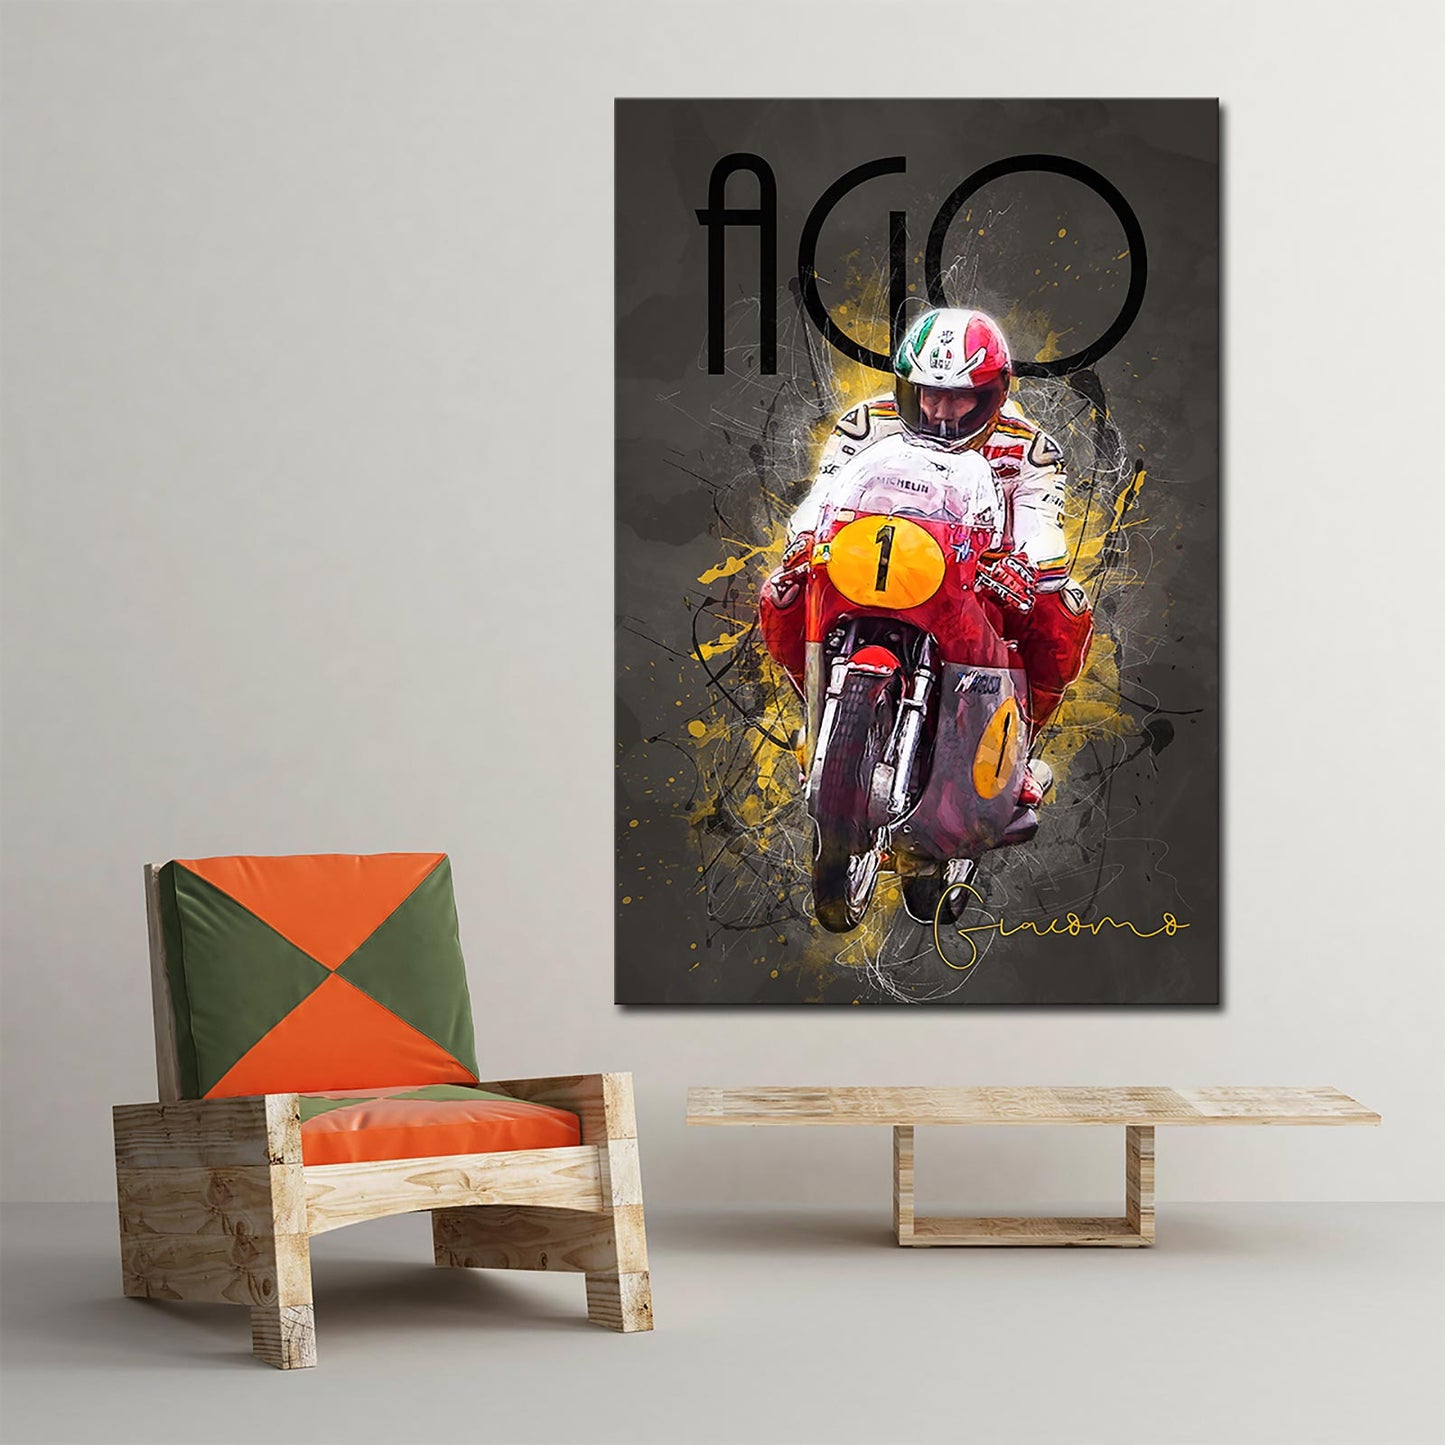 Leinwanddruck Artwork - Giacomo Agostini "AGO 2" auf MV Agusta - GA02